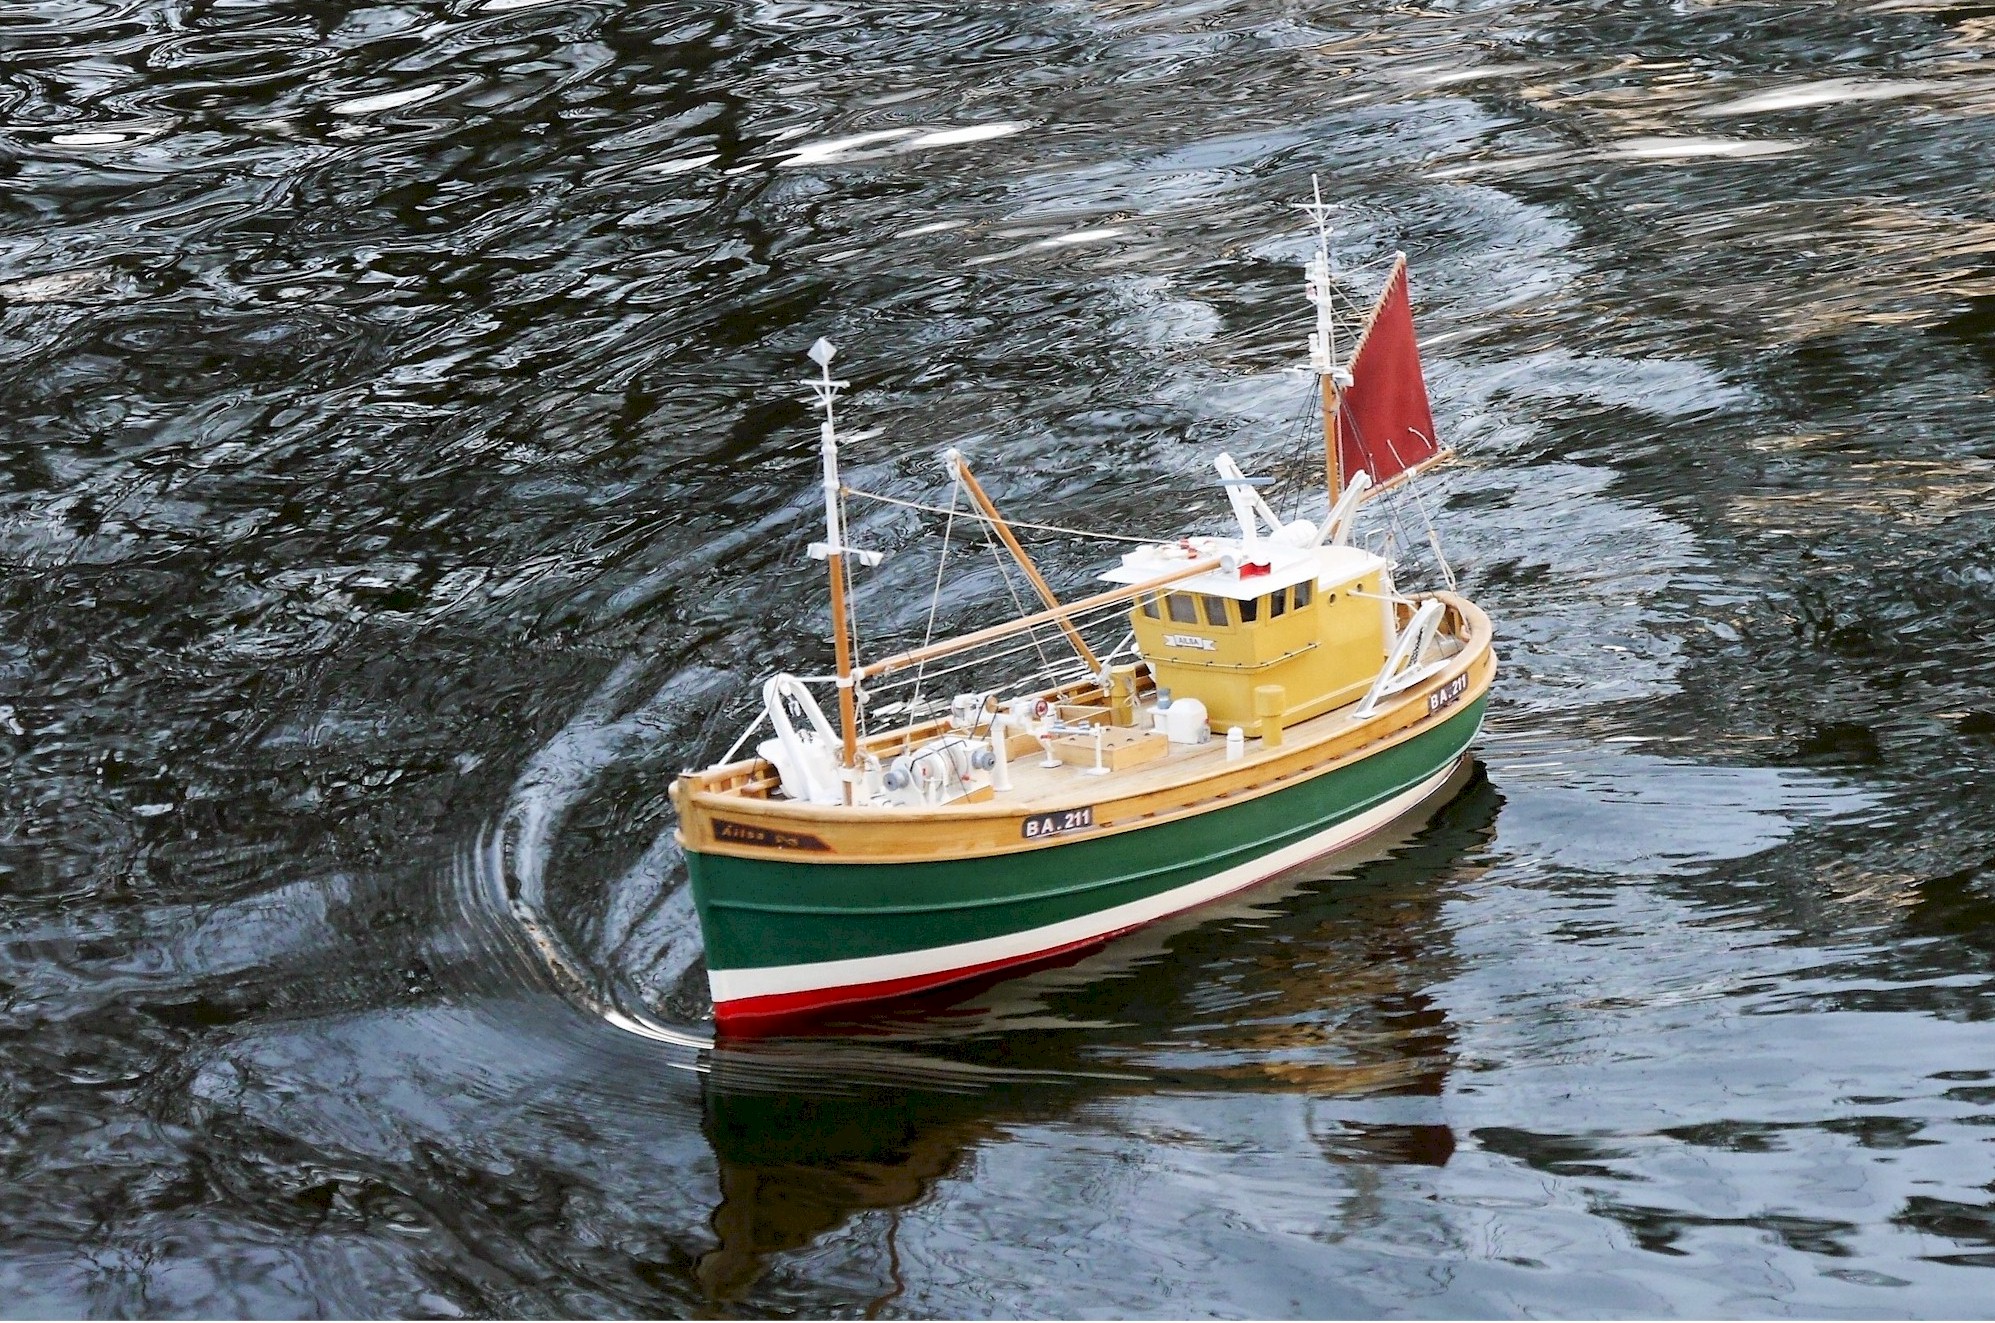  Cate Water Model Boat